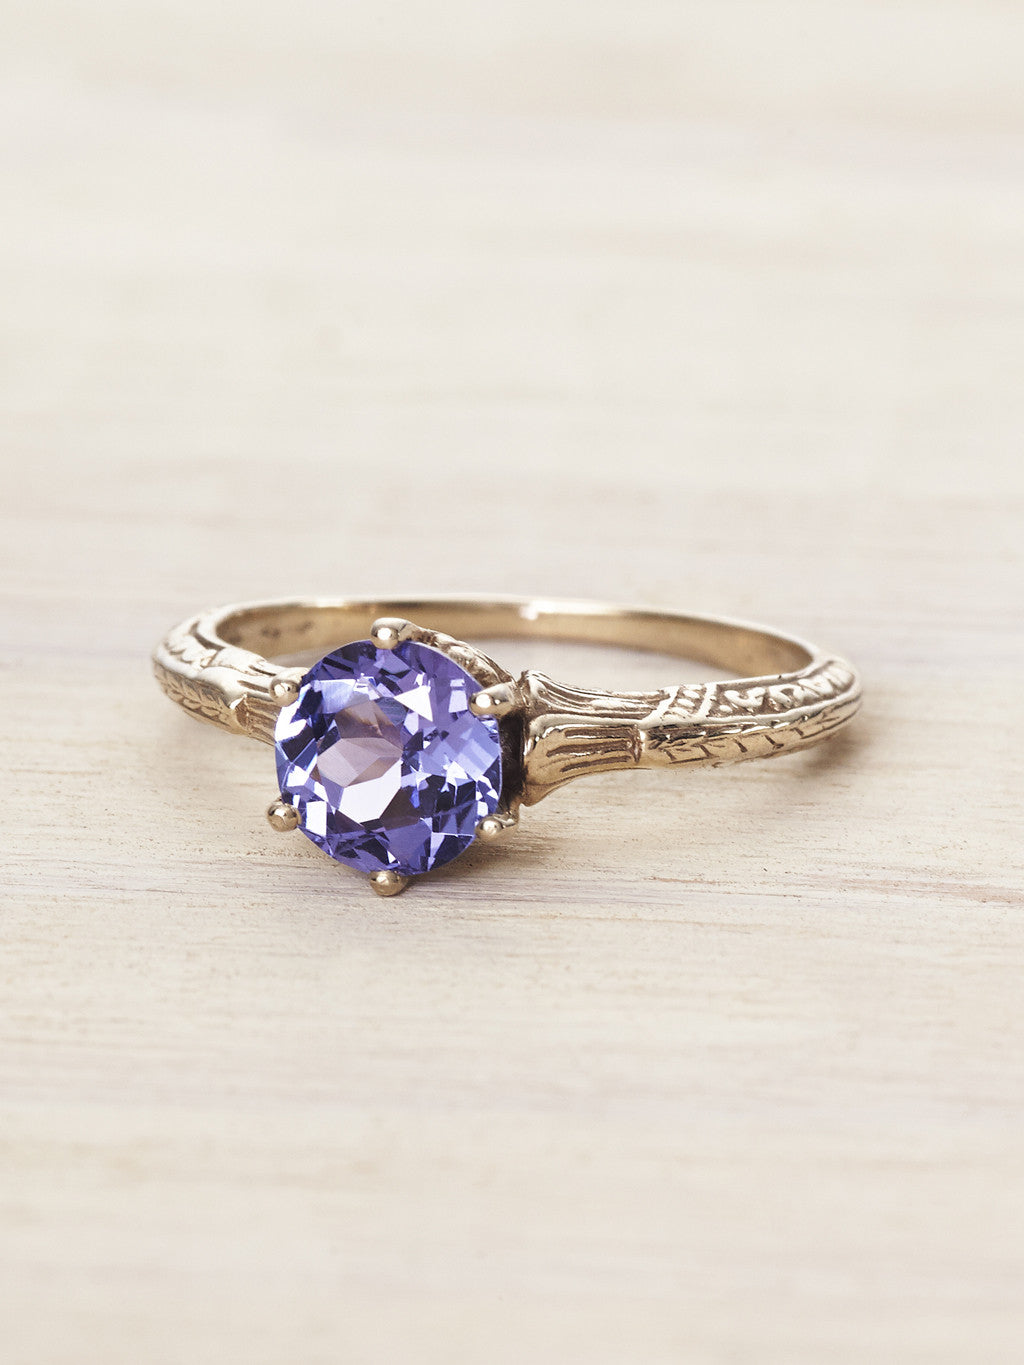 Antique Natural Lapis Lazuli Ring Engagement Ring Minimalist Ring Gift For  Women | eBay